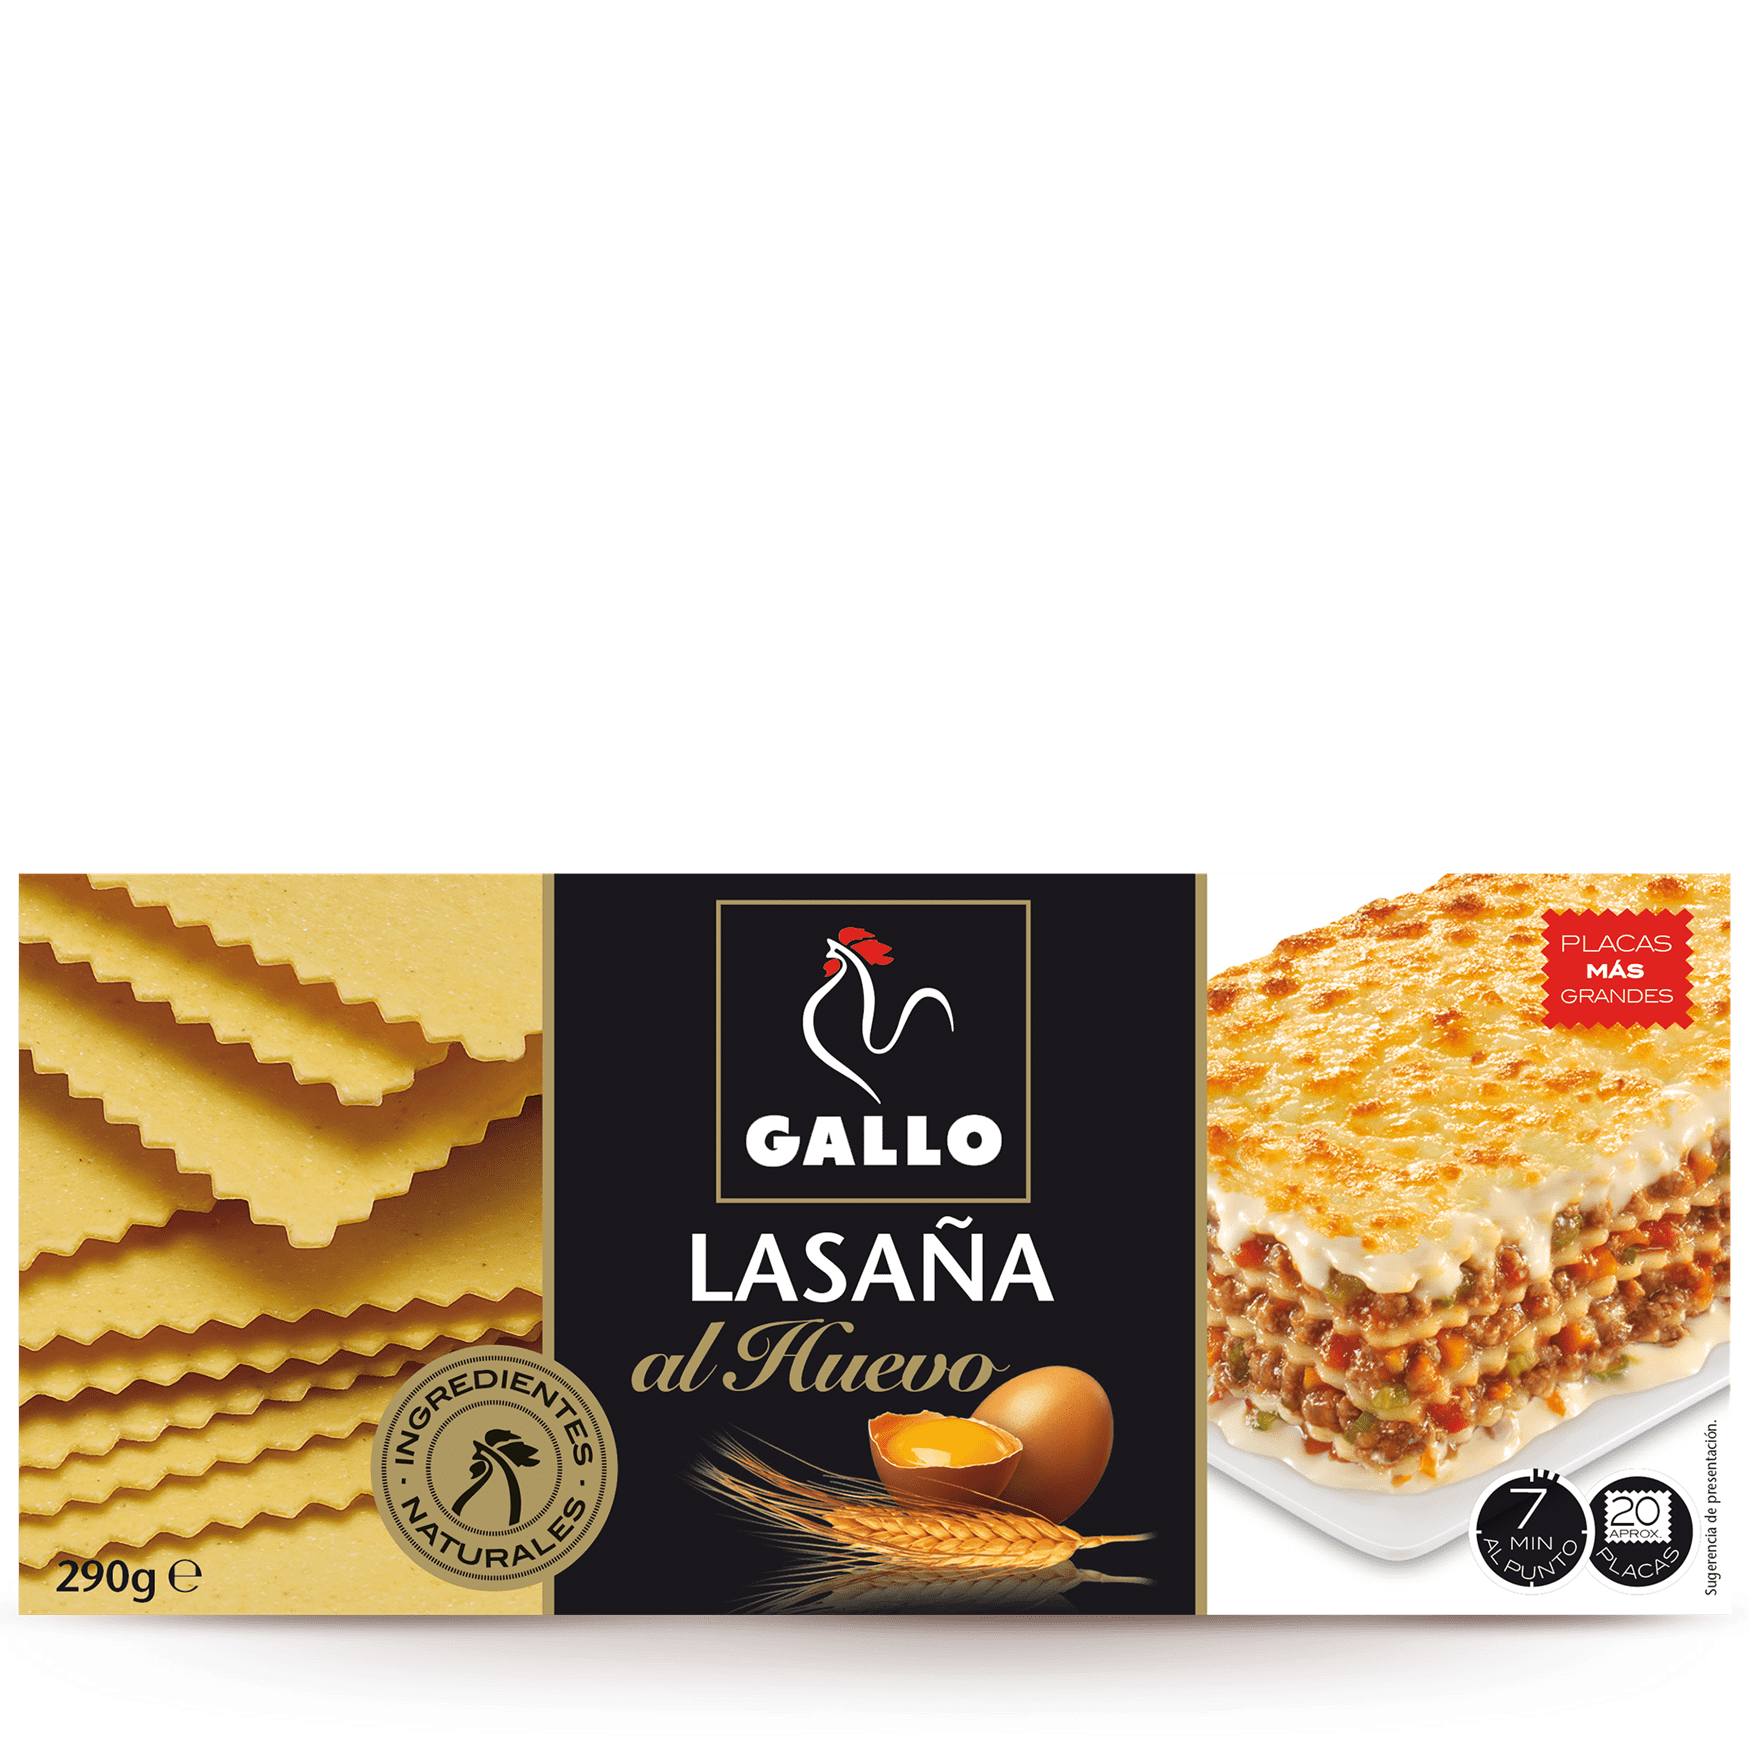 https://www.pastasgallo.es/wp-content/uploads/2020/12/GALLO-LASANA-HUEVO290g-2.png